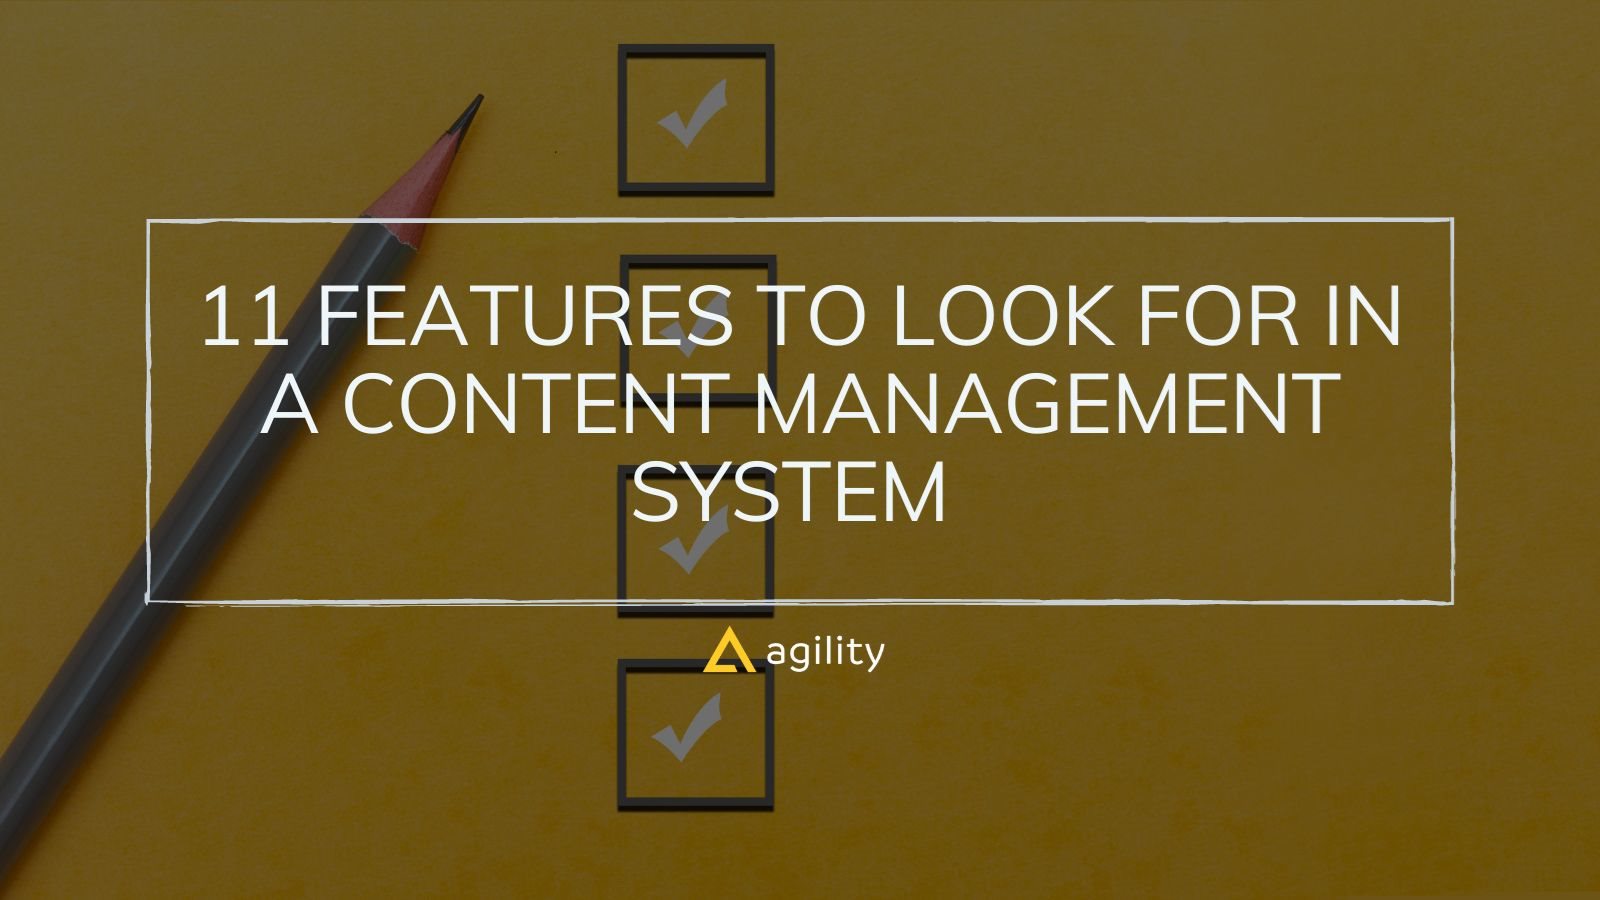 Content Management System Features